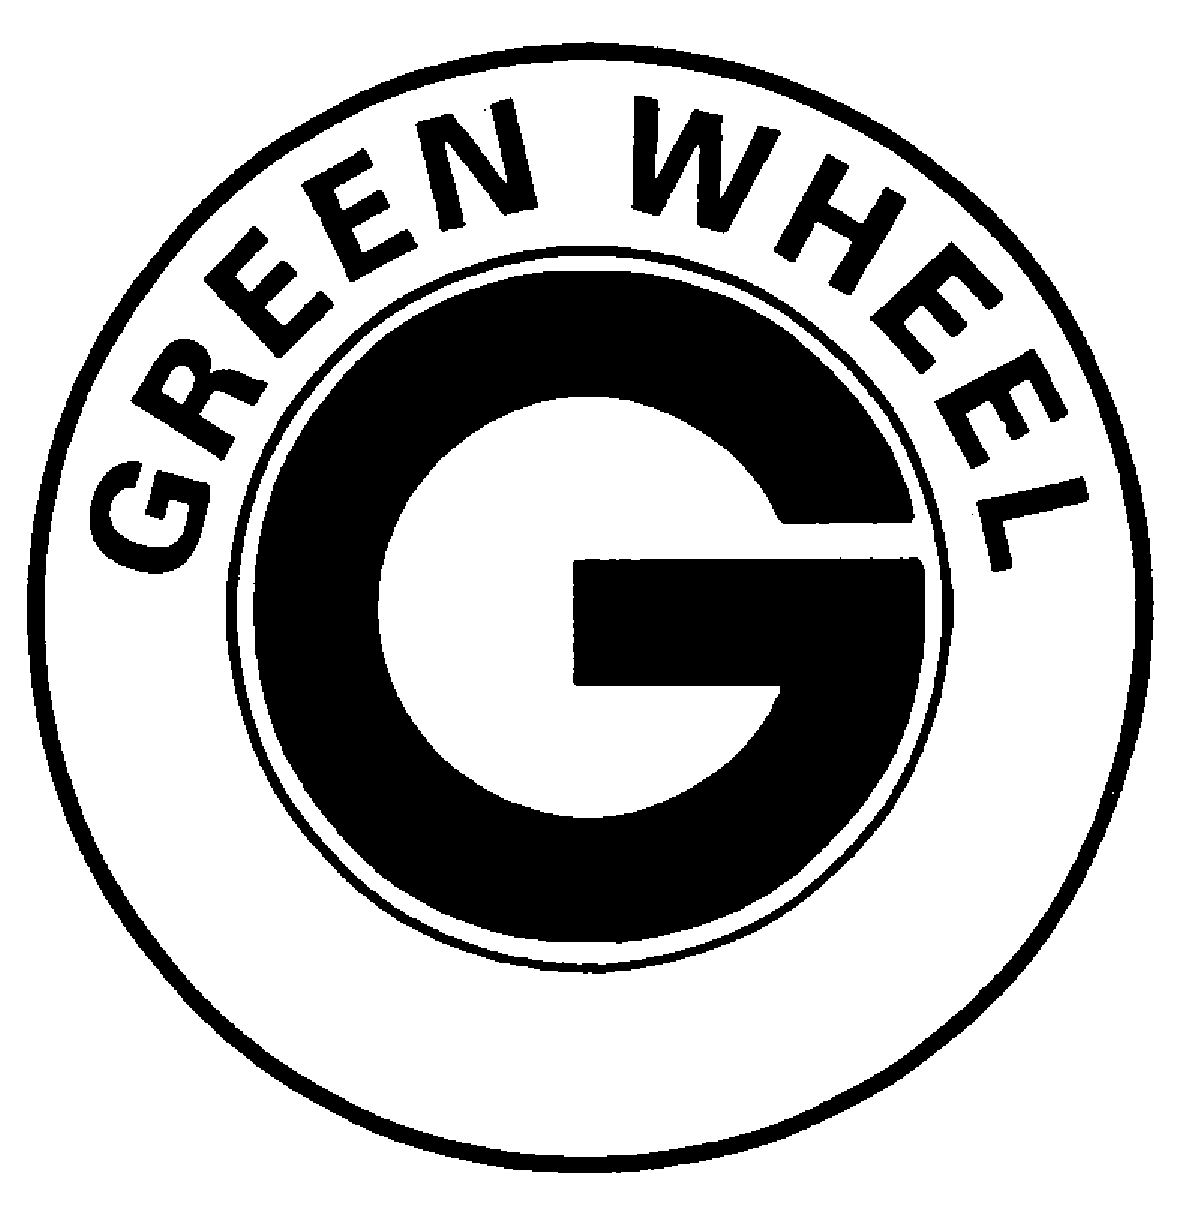  G GREEN WHEEL